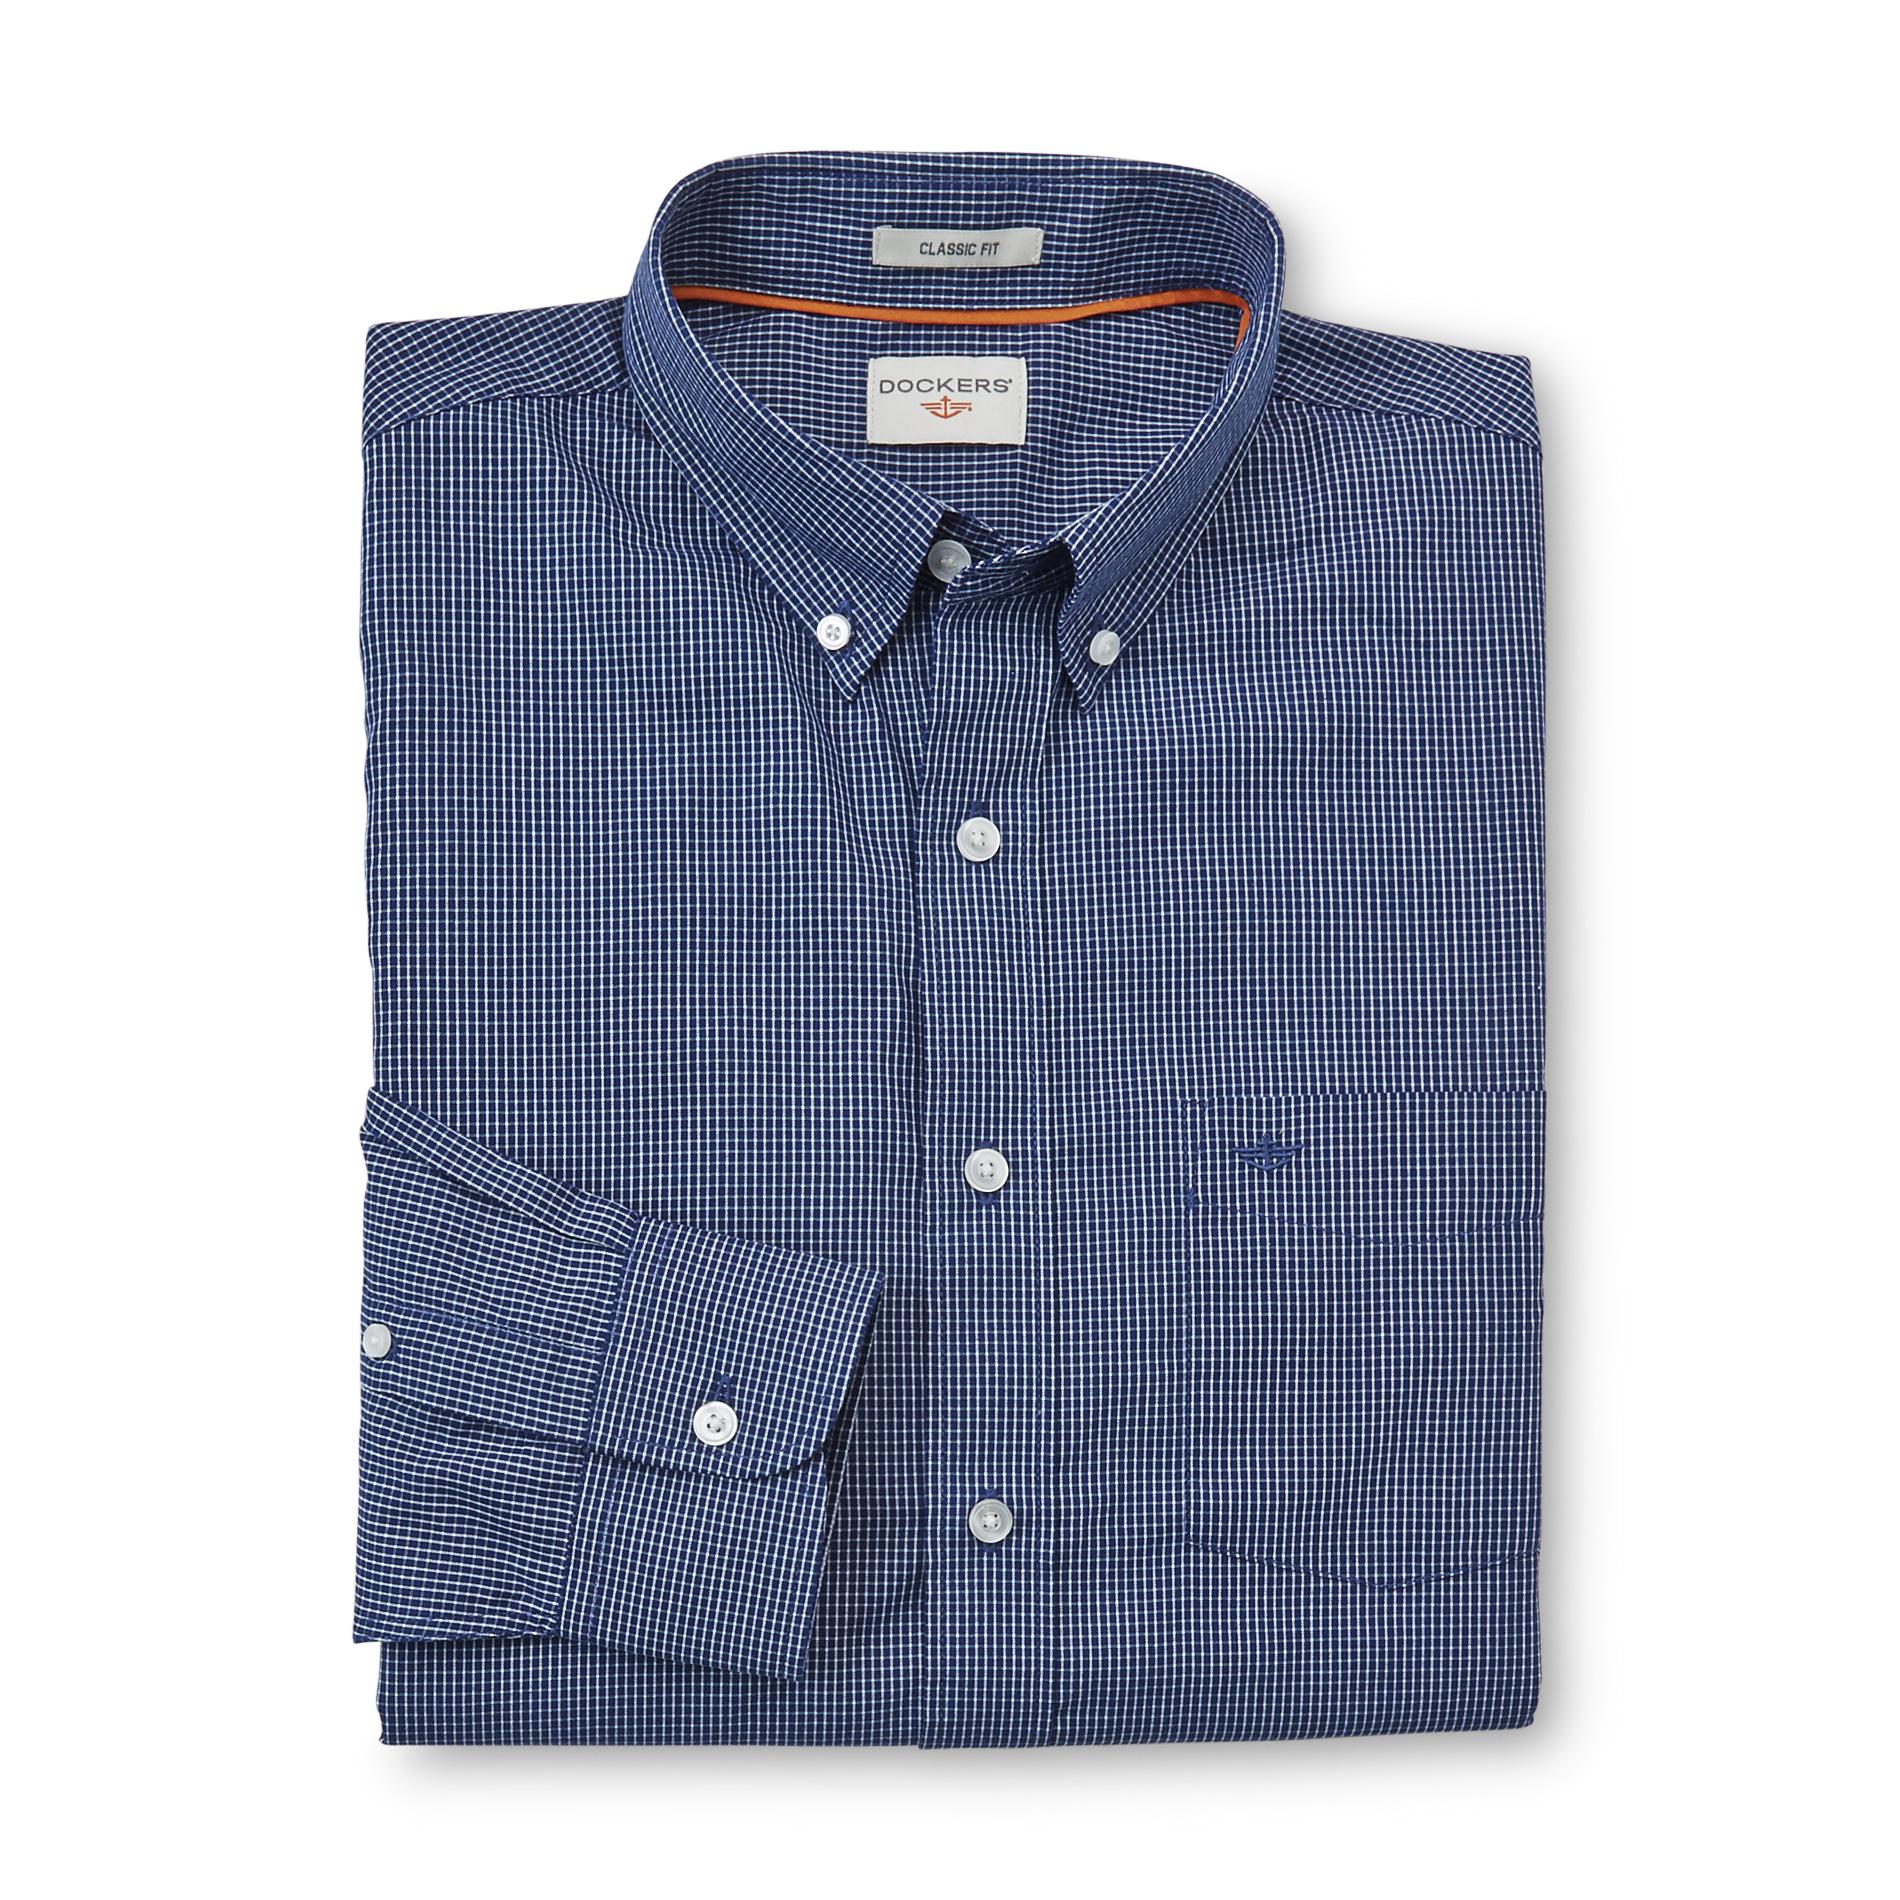 Dockers Men's Button-Down Shirt - Checkered